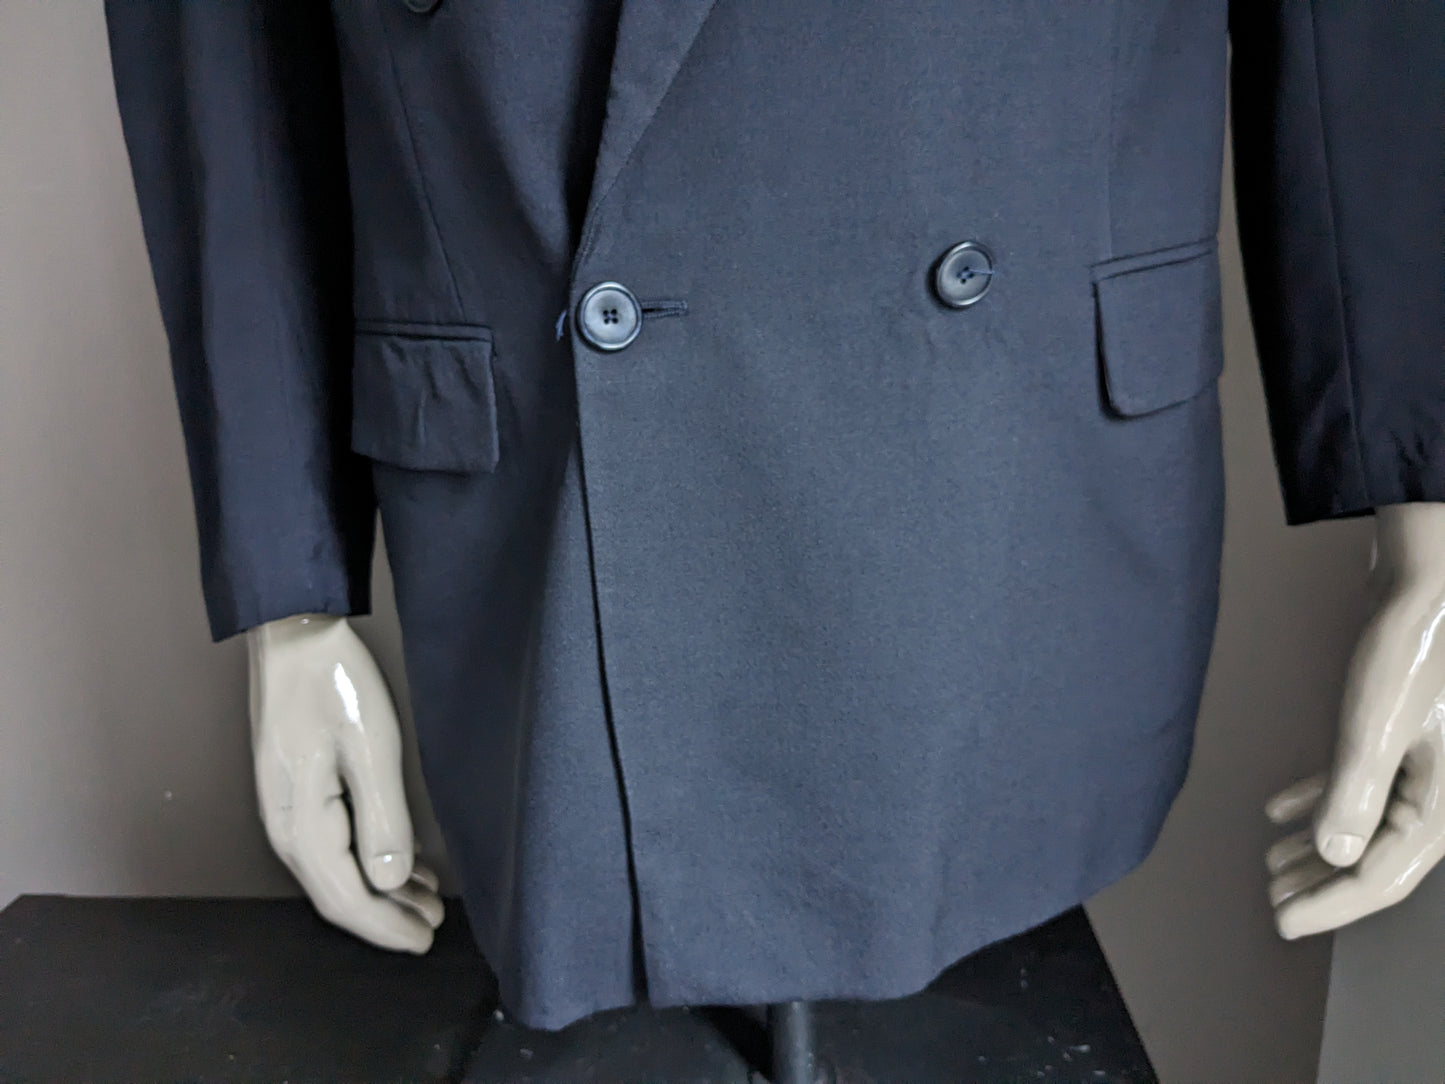 Vintage McGregor Woolen Double Breasted Jacke dunkelblau gefärbt. Größe 26 (52 / l).